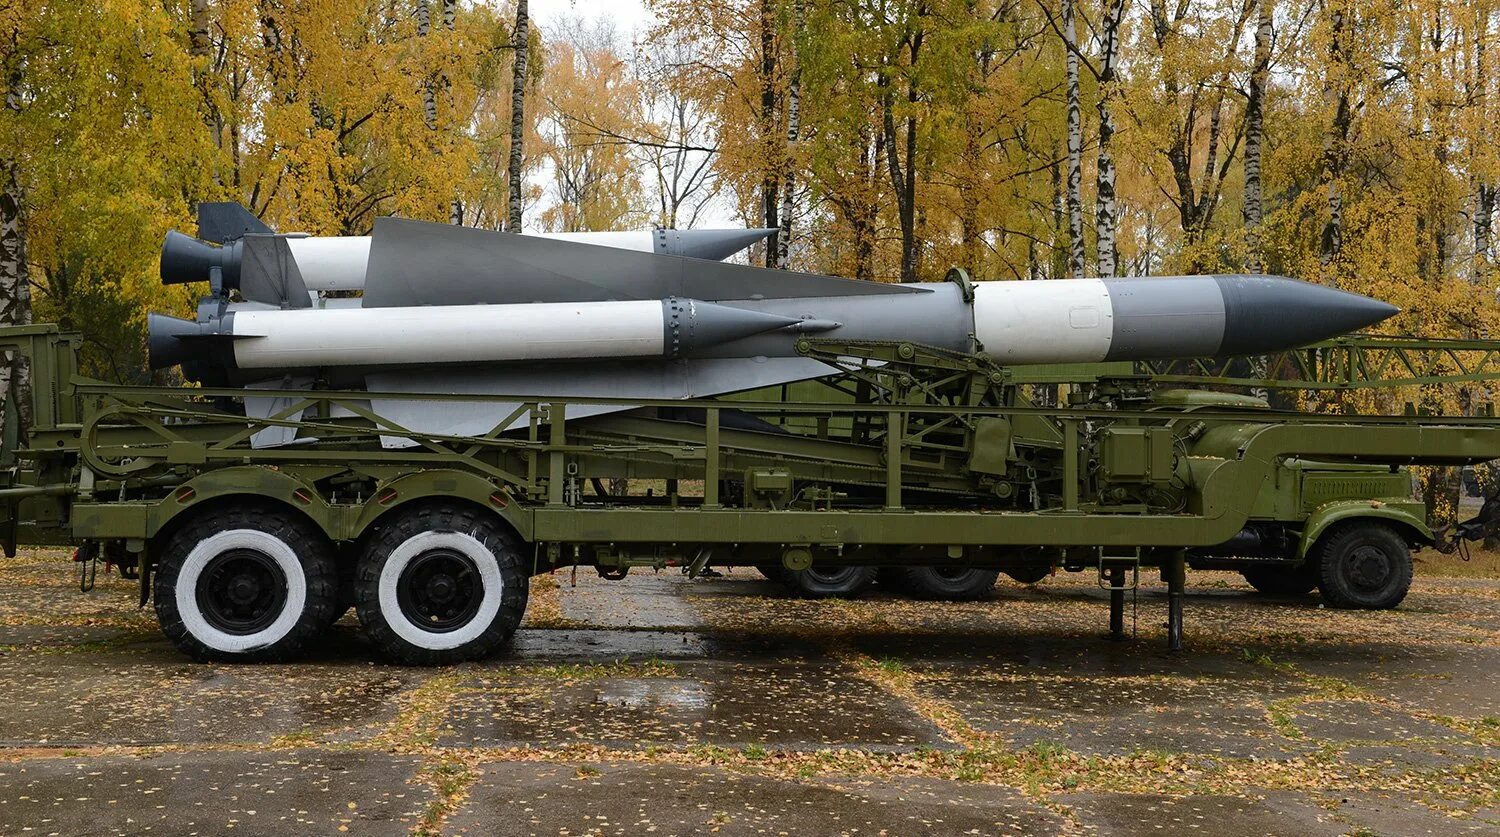 Ракета с 200 вес. С200 ракеты ПВО. ЗРК С-200 Ангара. ЗРК С-200 «Ангара», «Вега», «Дубна». 200 Комплекс ПВО.